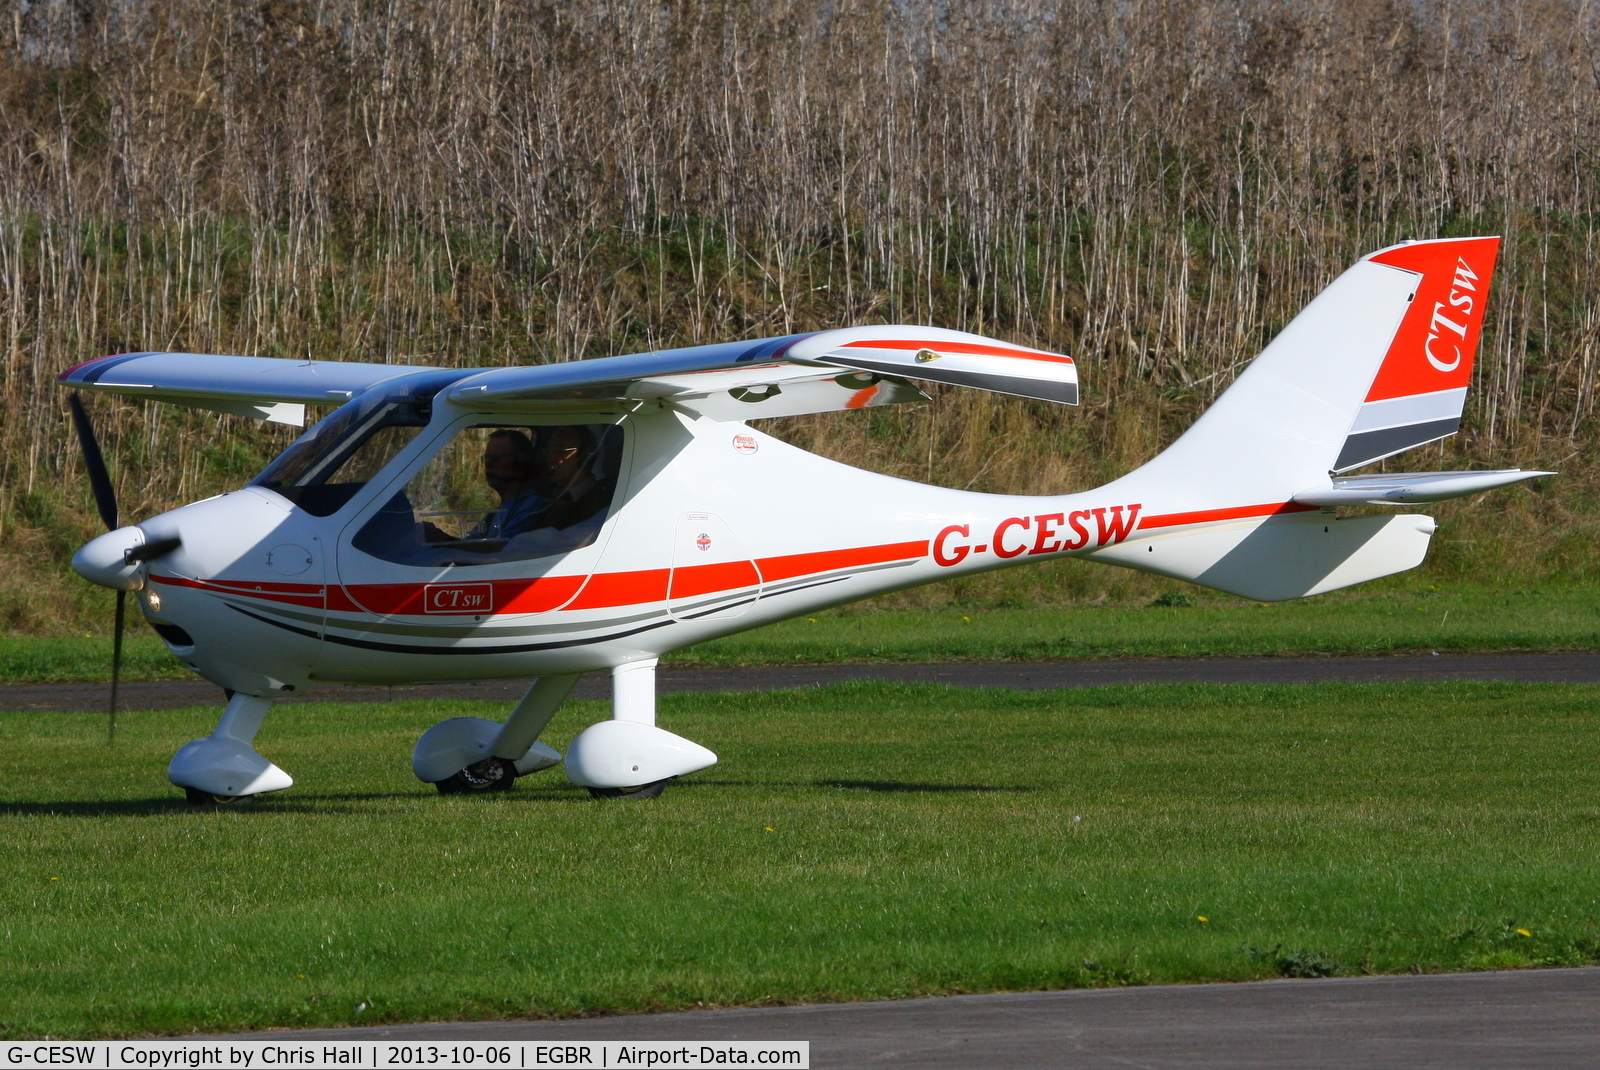 G-CESW, 2007 Flight Design CTSW C/N 8296, at Breighton's Pre Hibernation Fly-in, 2013